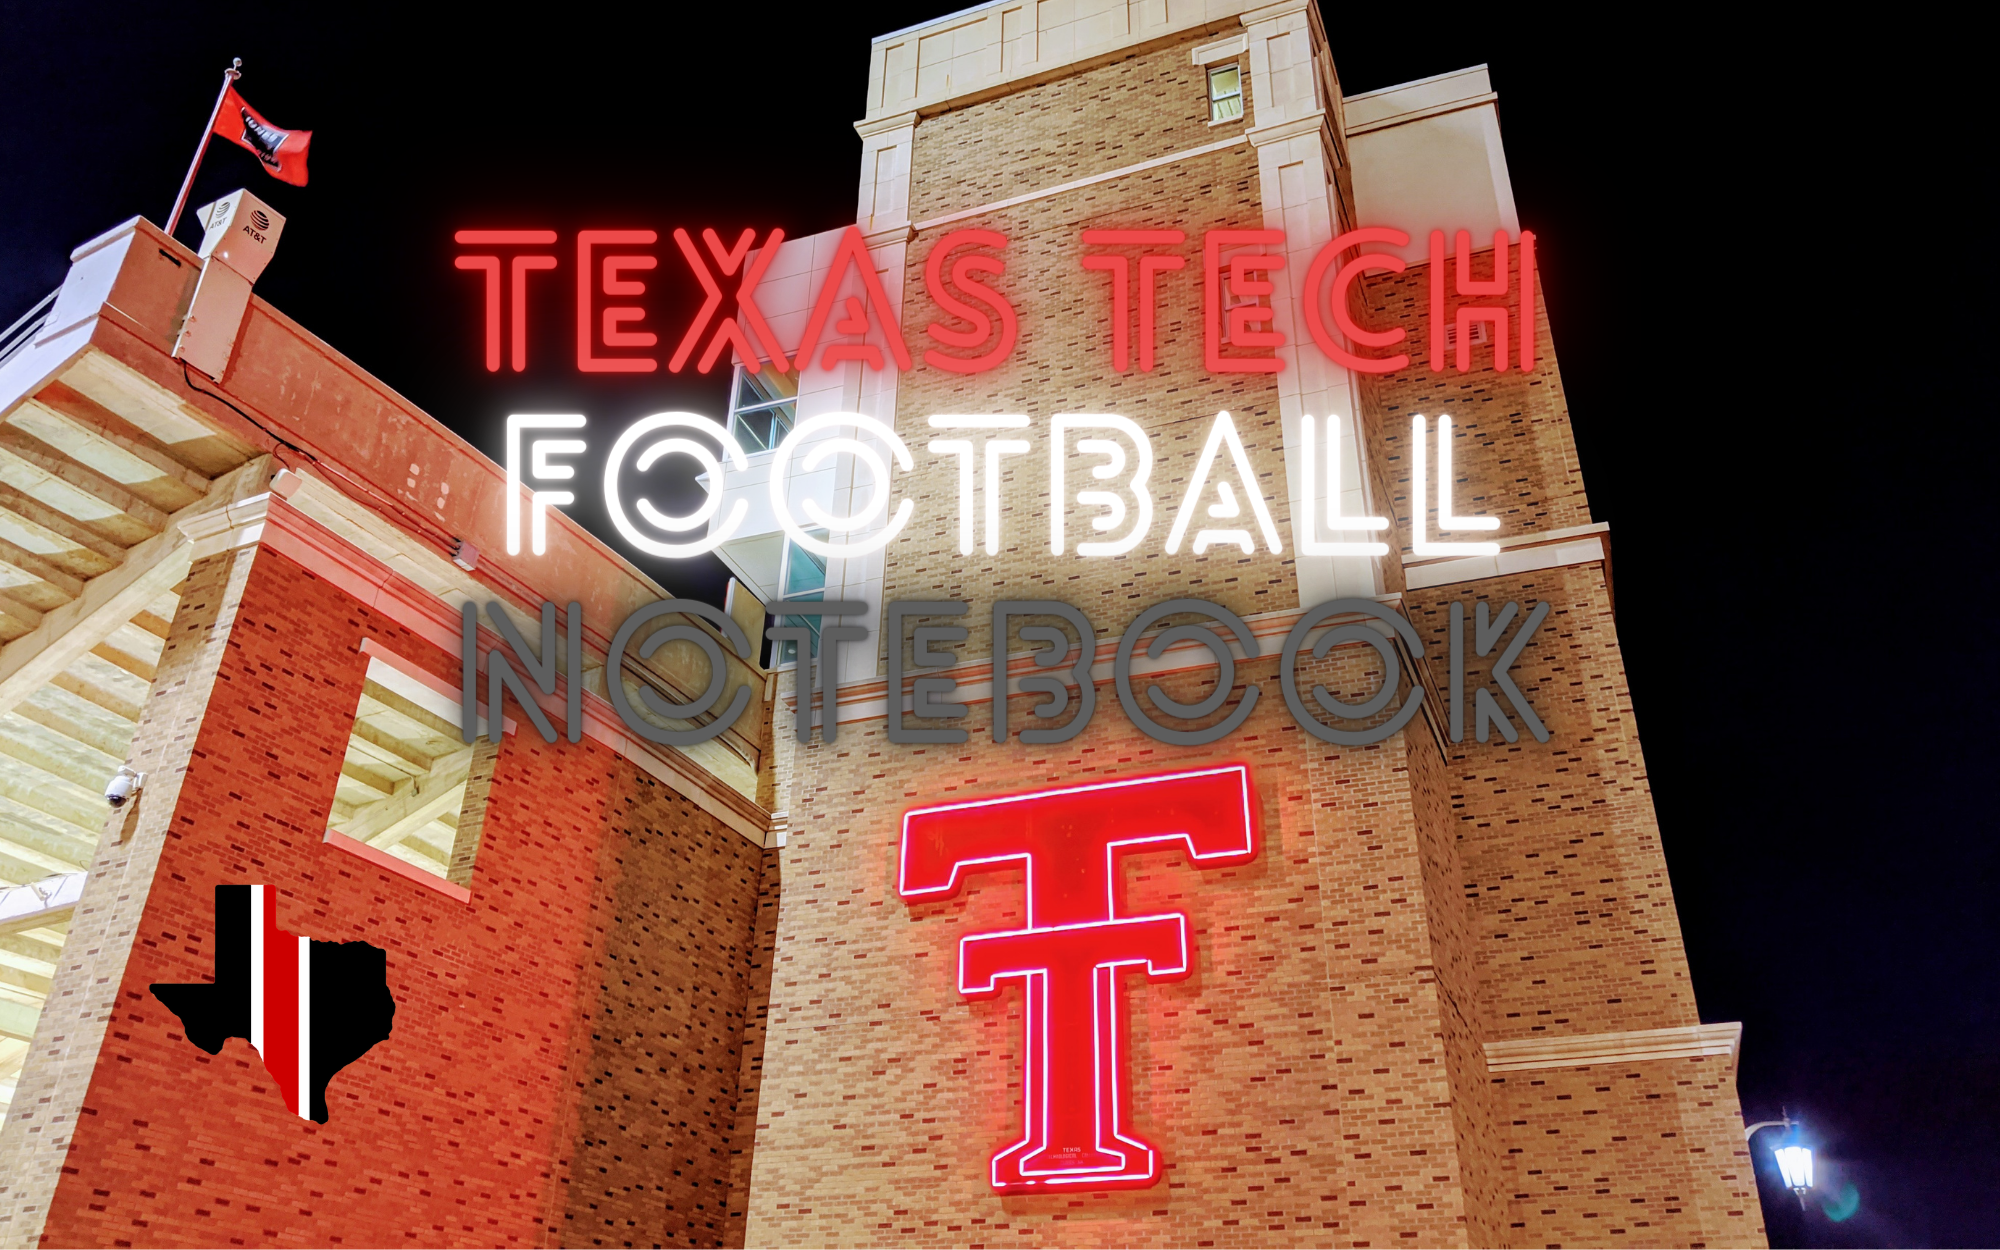 Texas Tech Football Notebook: Texas Tech’s Appearance at Big 12 Media Day